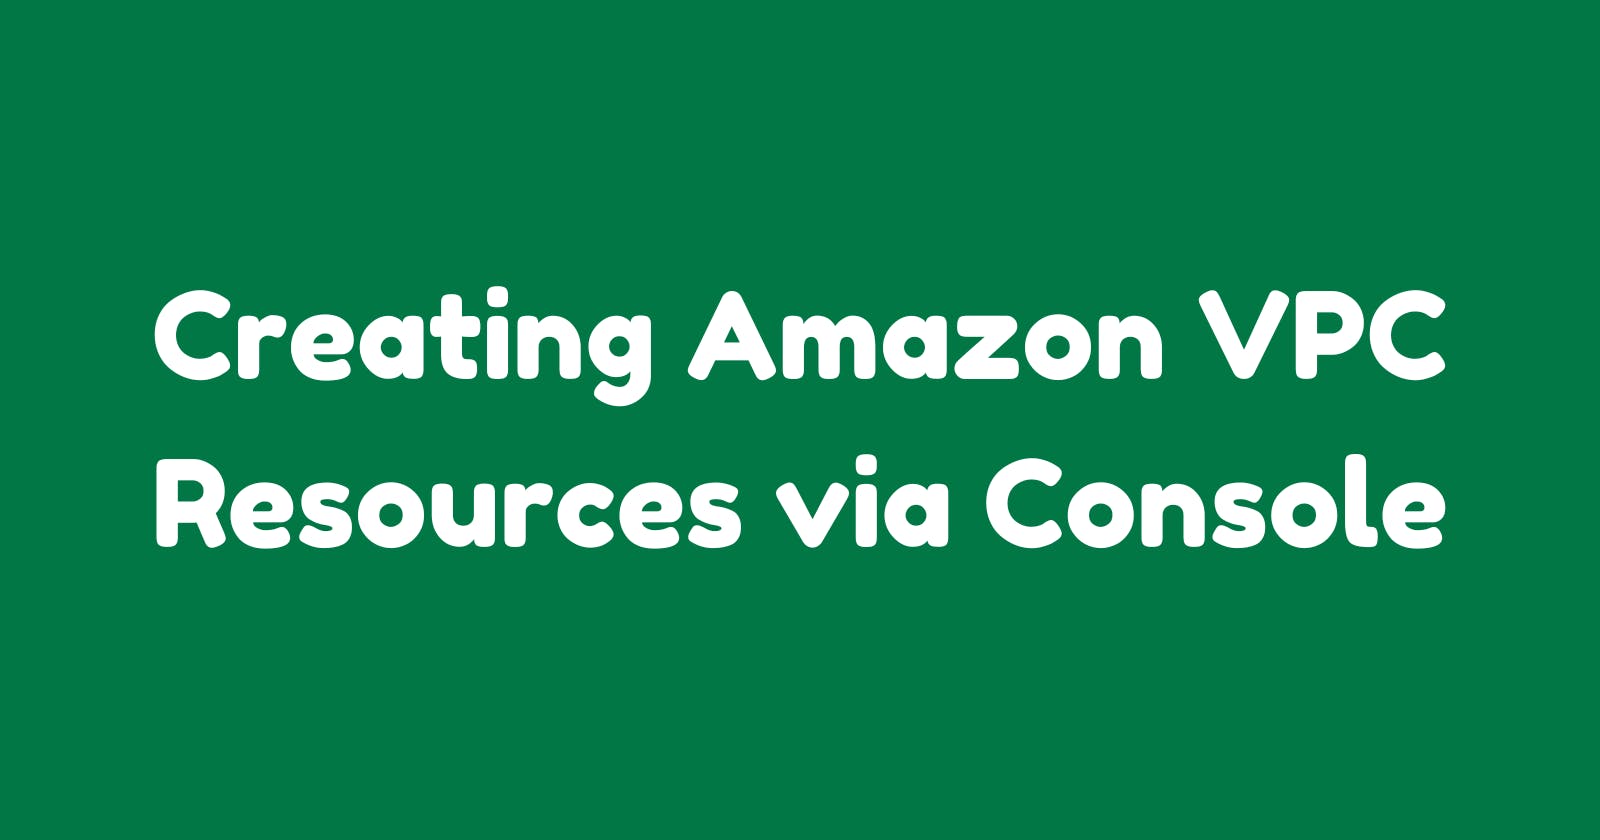 Creating Amazon VPC Resources via Console